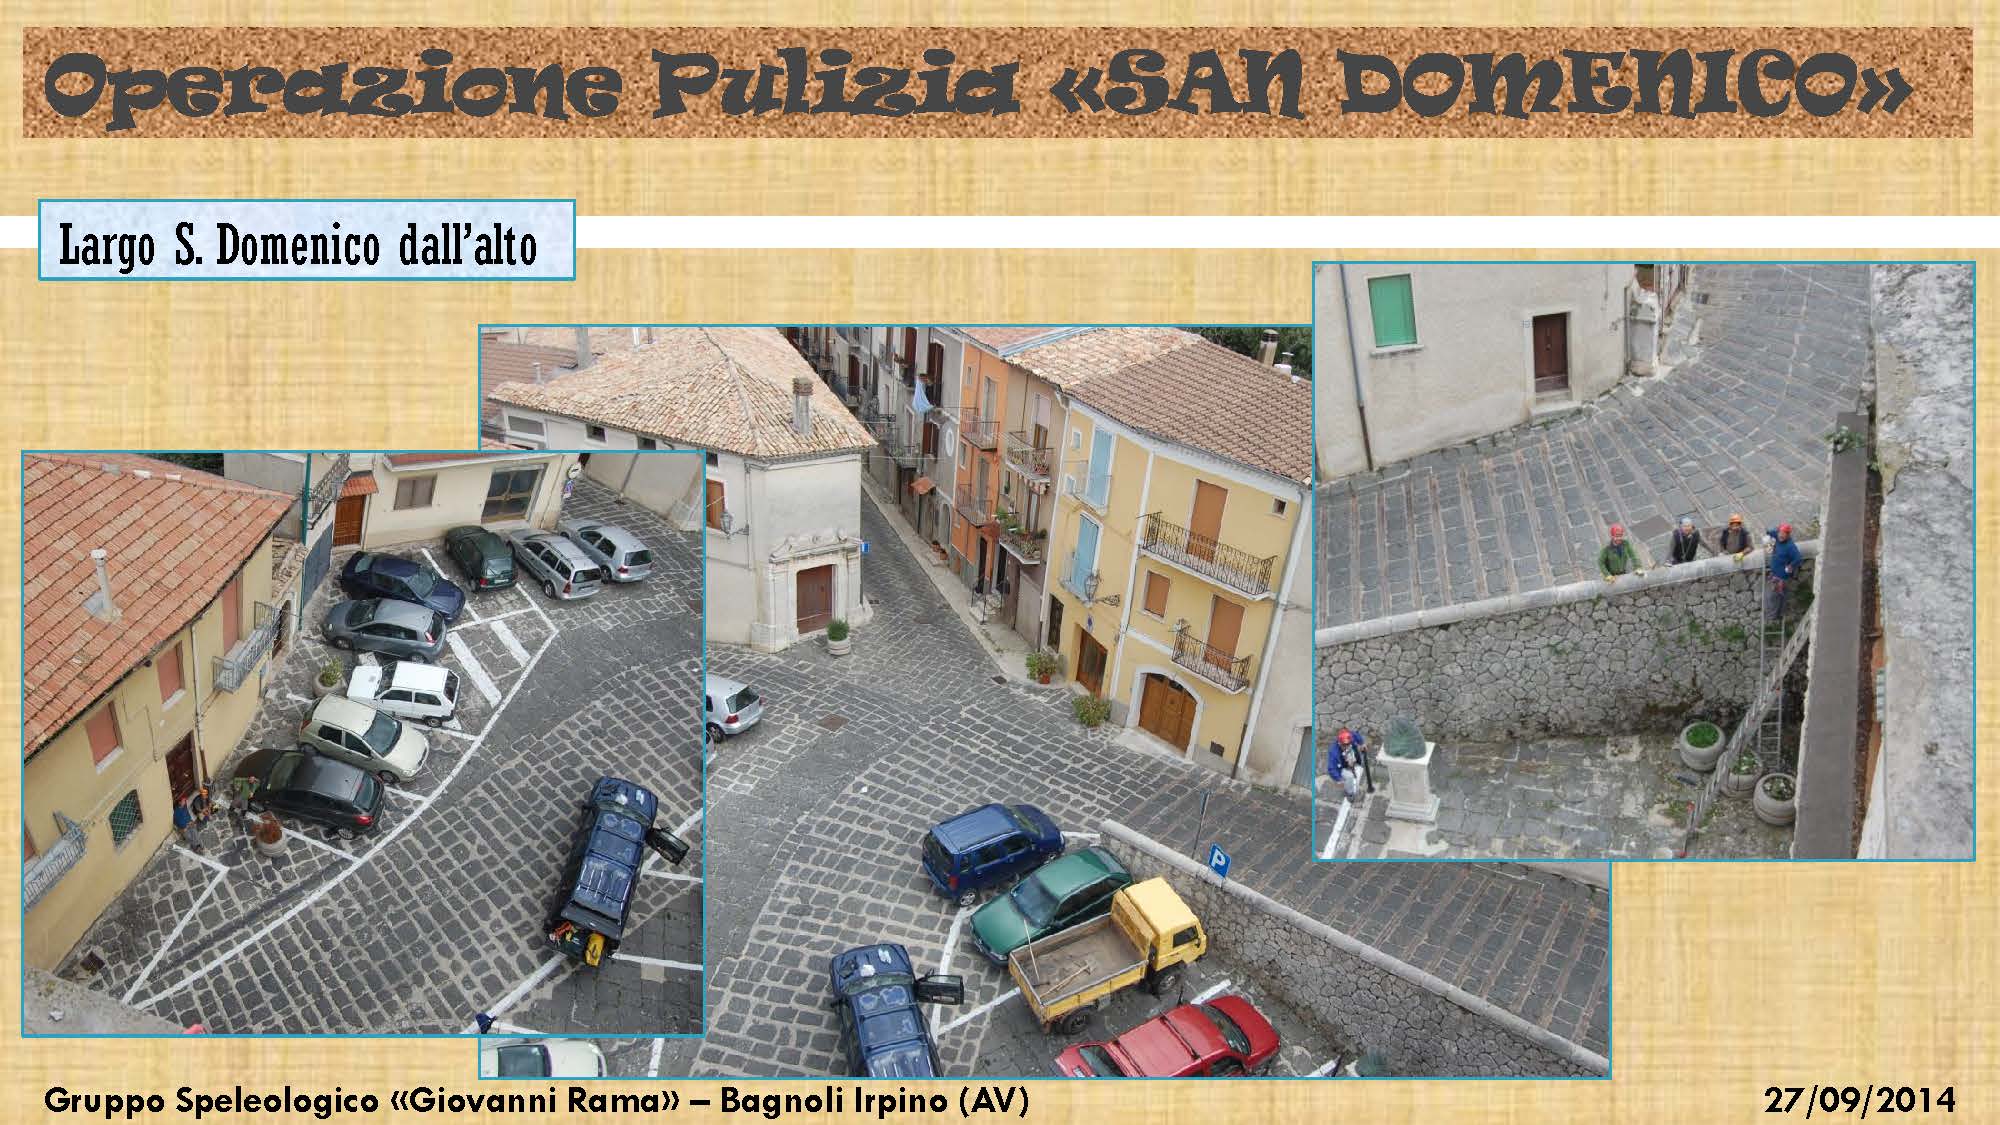 Bagnoli-Pulizia-San-Domenico-2014_Pagina_28